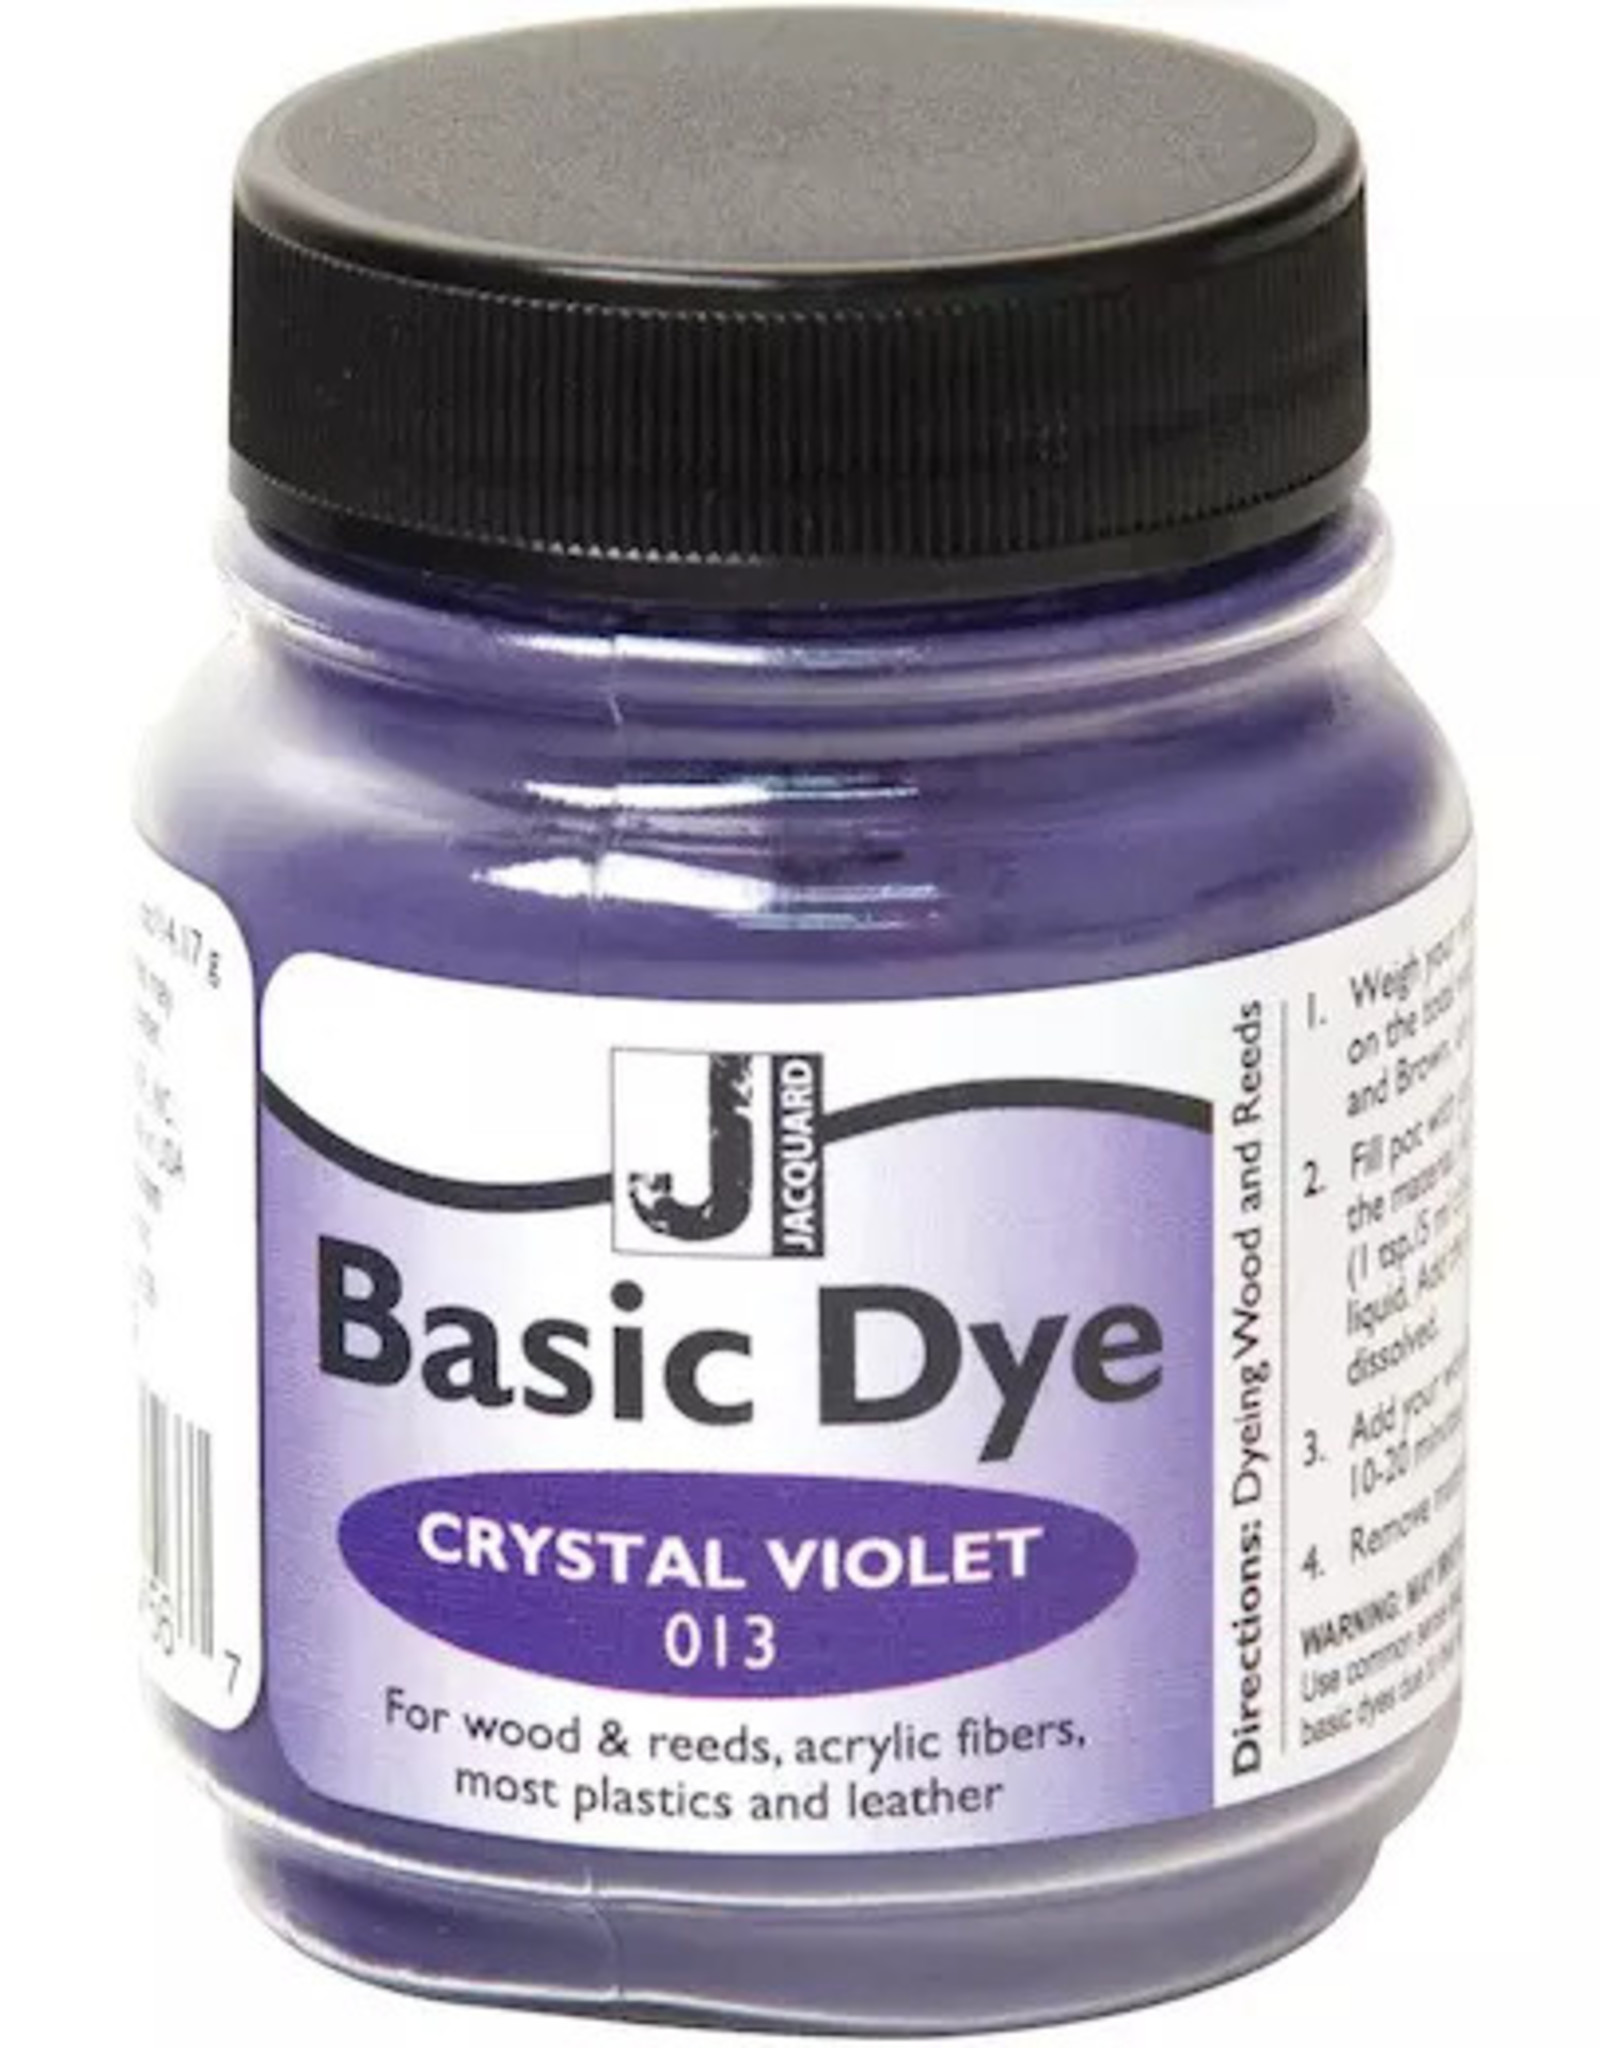 Jacquard Products Jacquard Basic Dye Crystal Violet